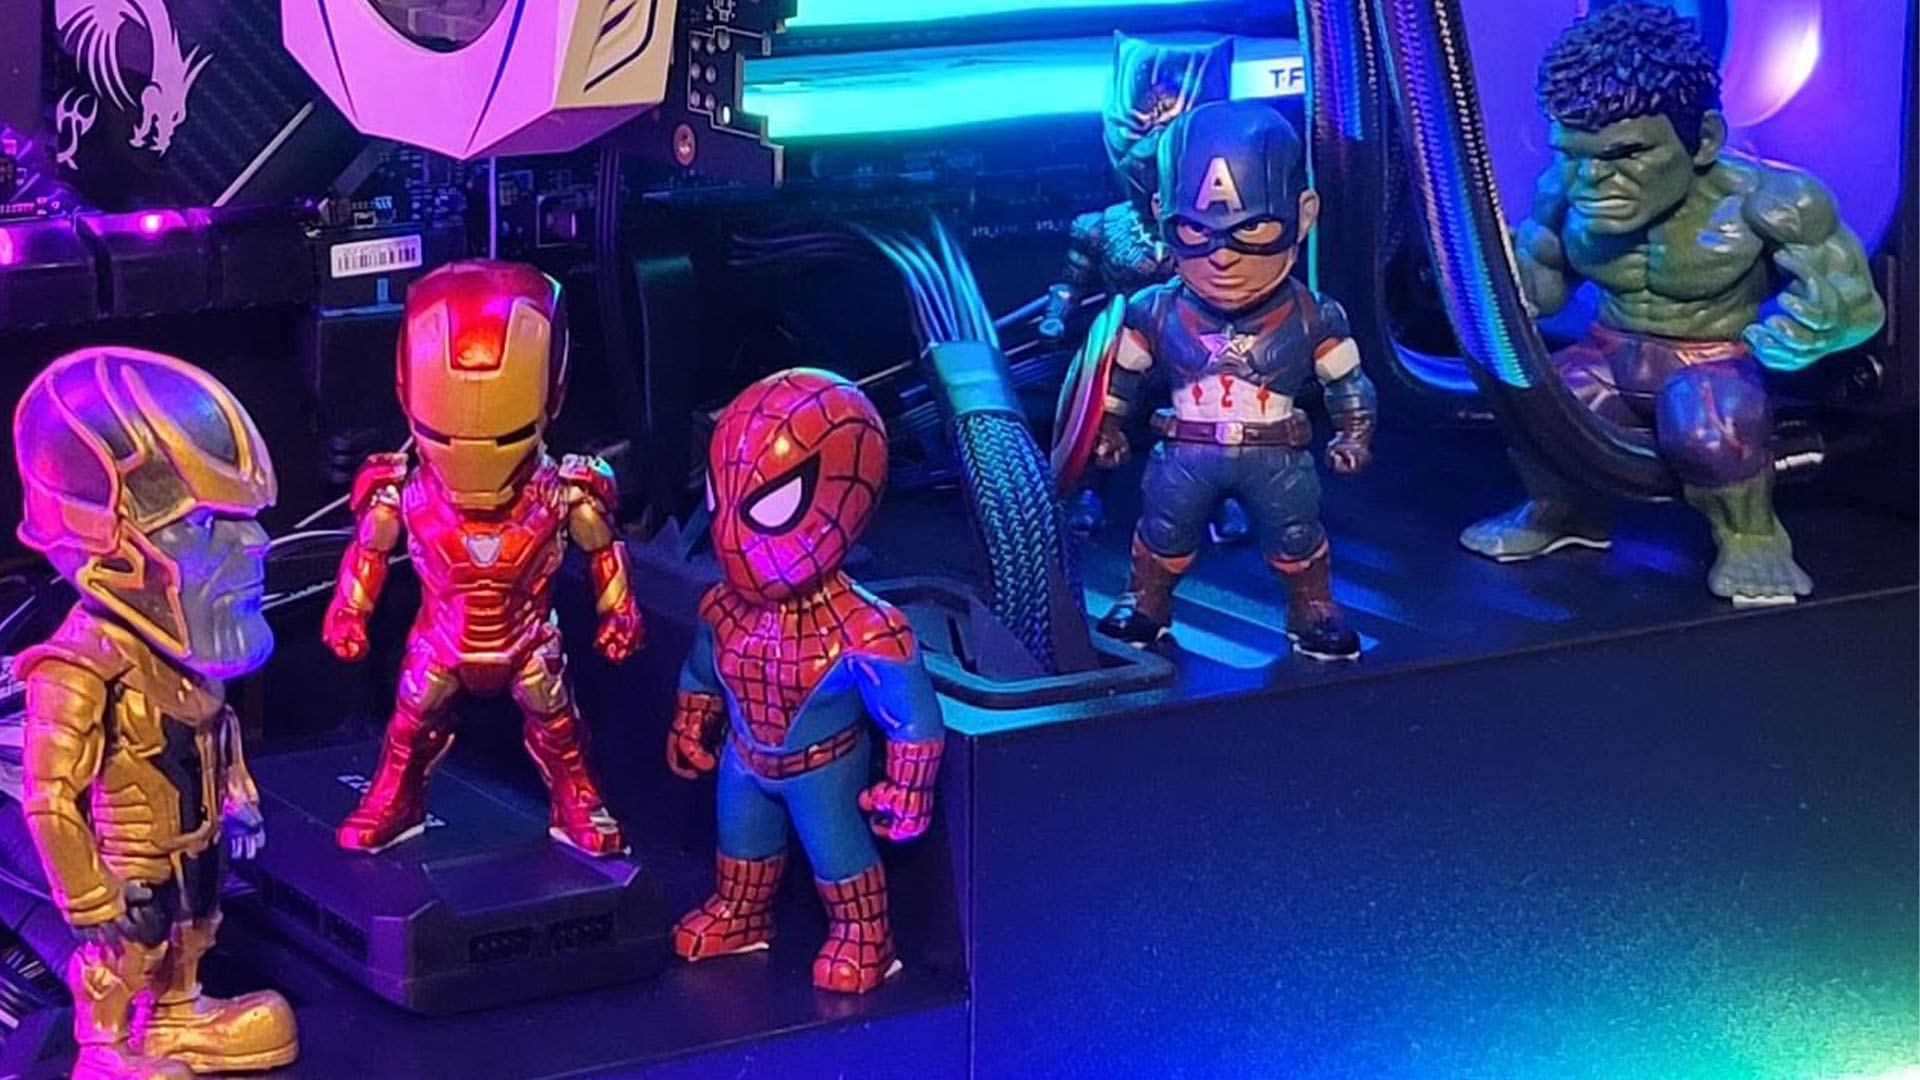 Die Avengers-Figuren im Gaming-PC